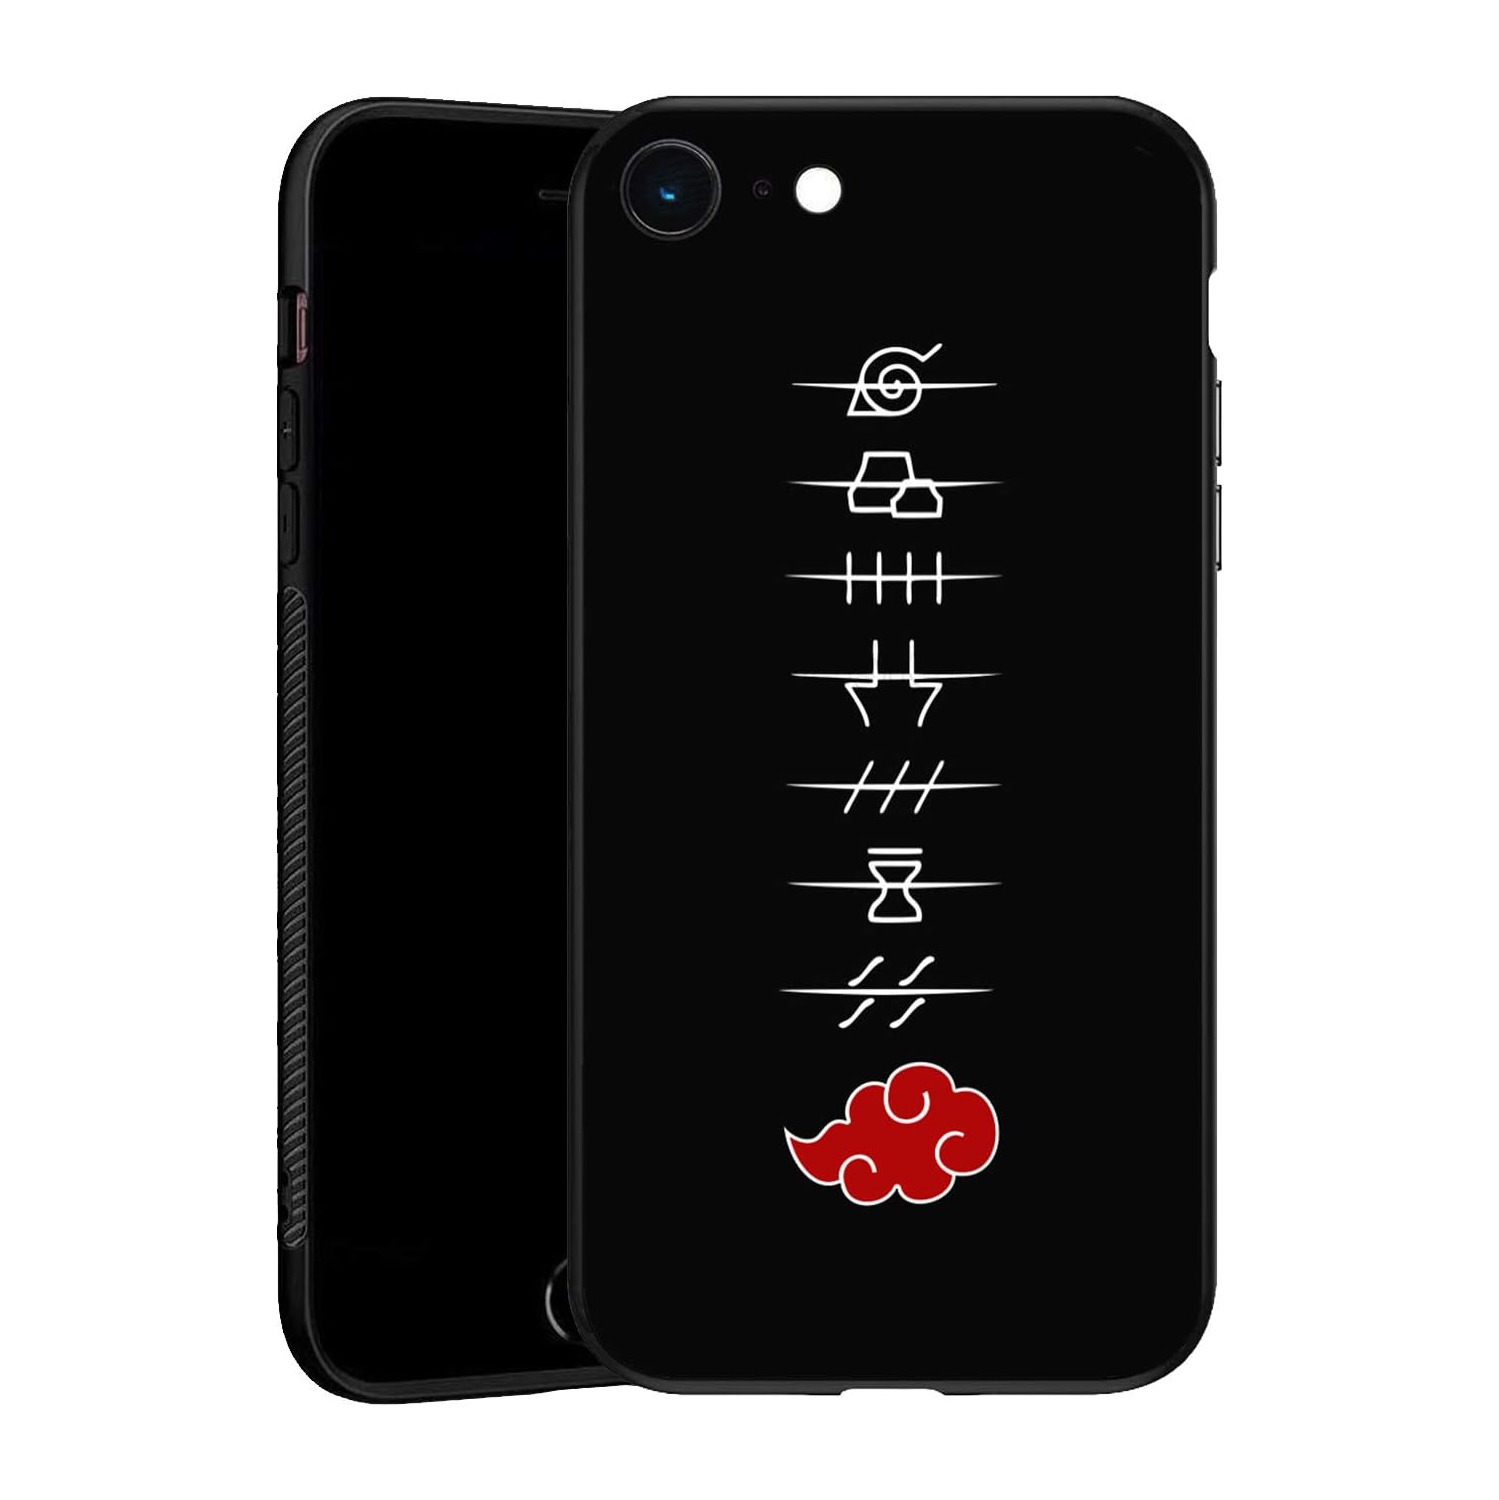 iPhone SE 2020, iPhone 7/8 Case, Ultrathin Black TPU Cases Cover for iPhone 7/8, Naruto- Akatsuki Village Symbols